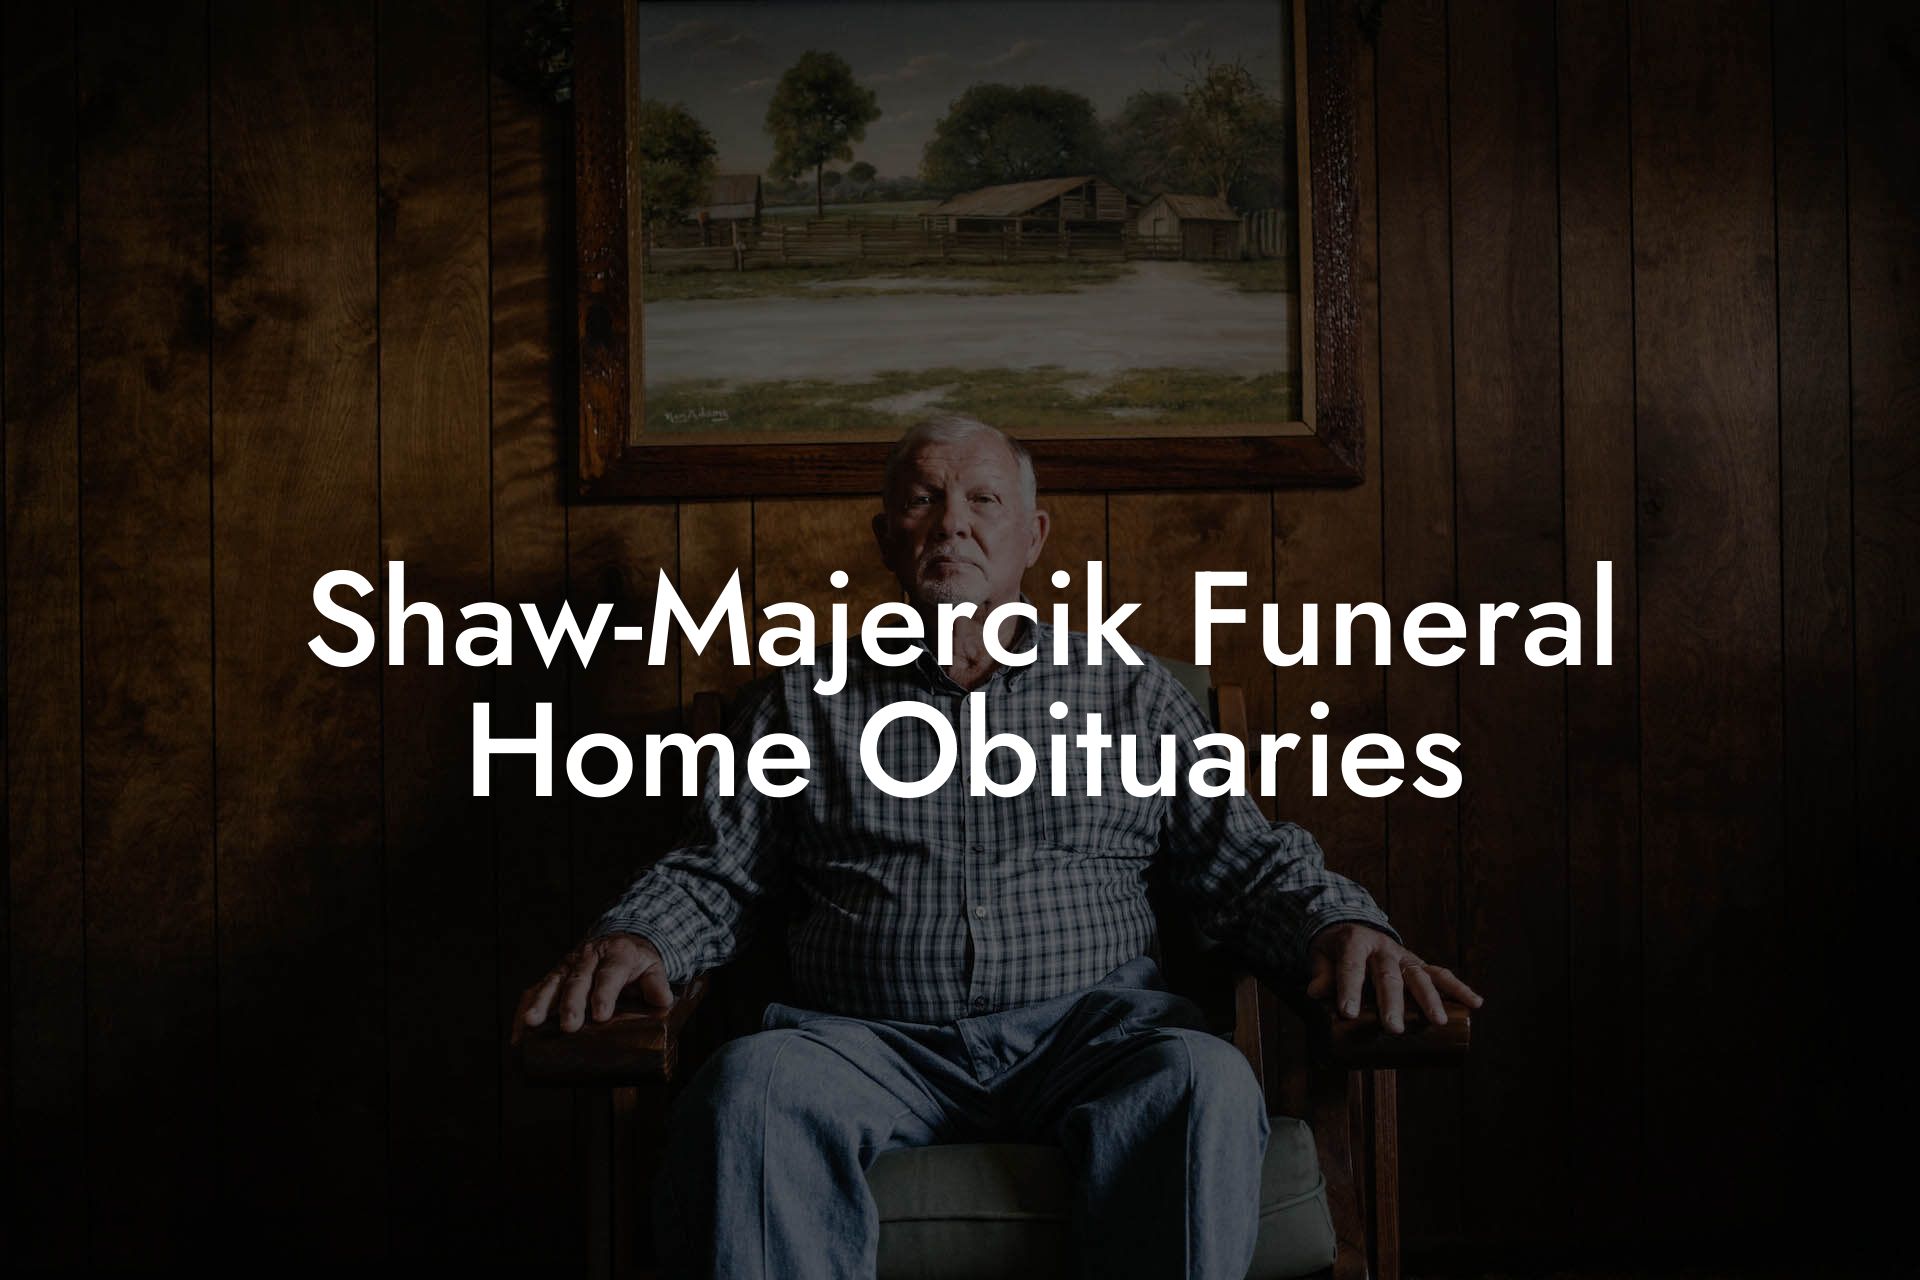 Shaw-Majercik Funeral Home Obituaries